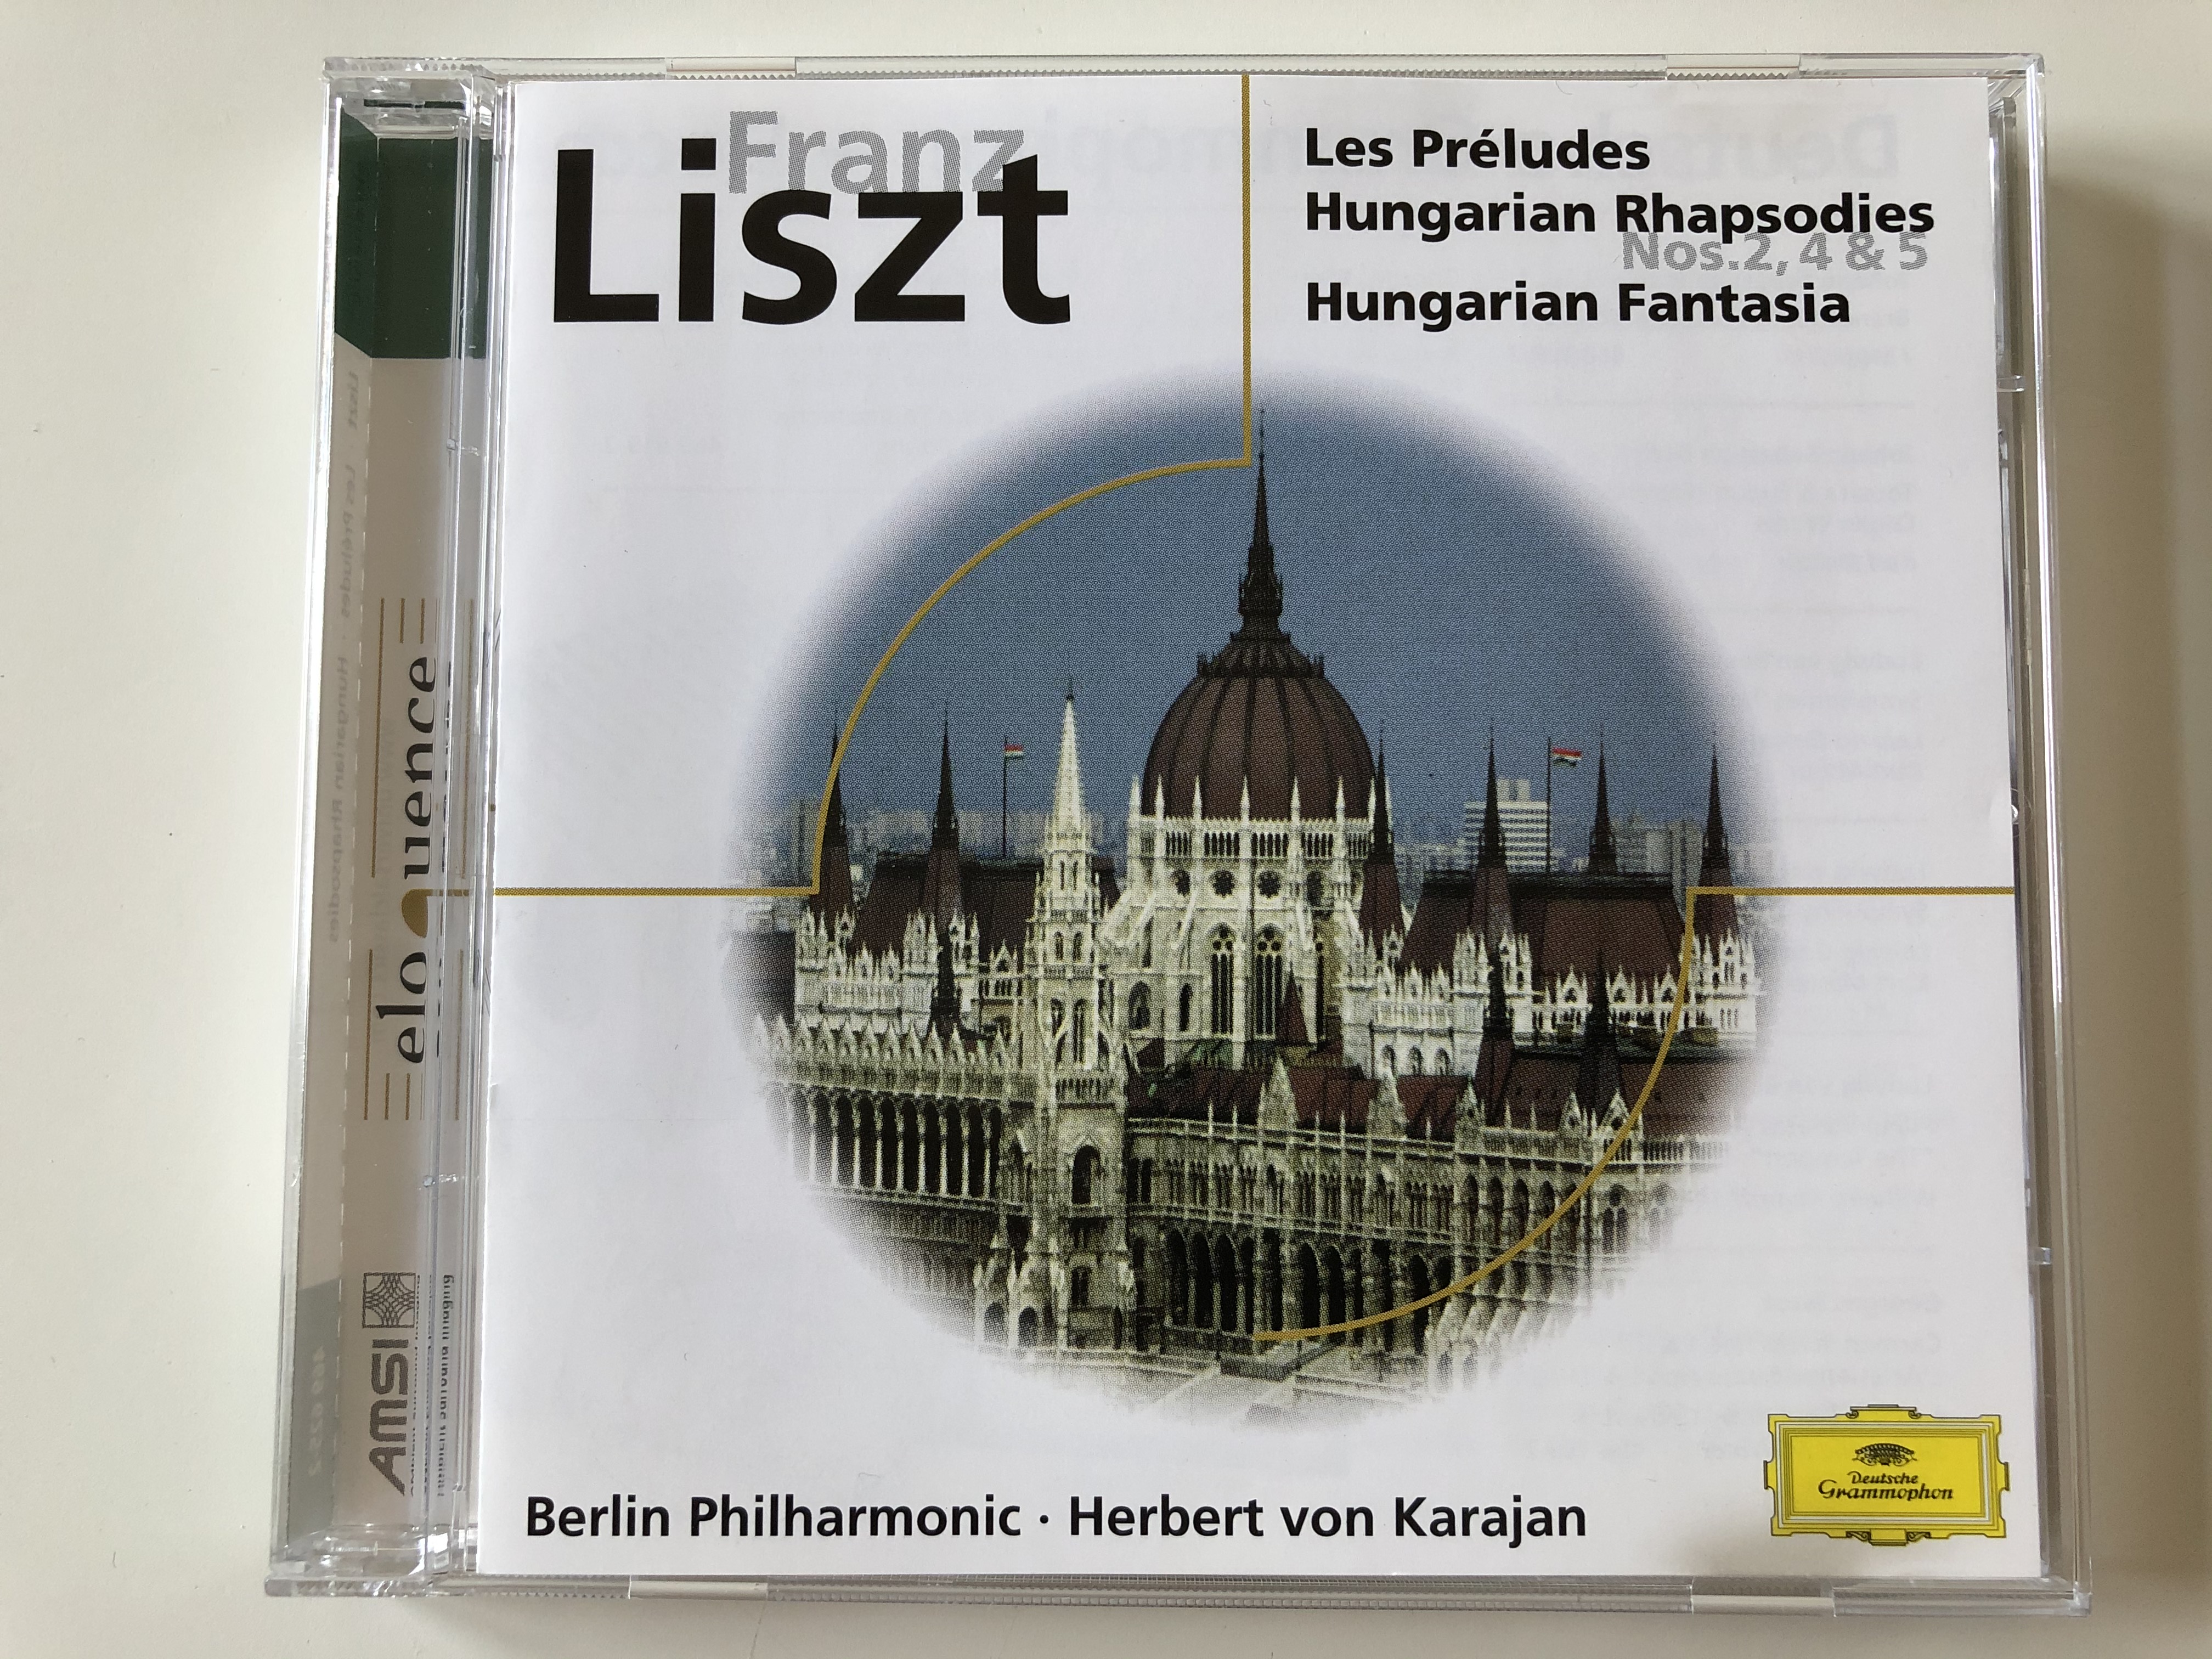 franz-liszt-les-preludes-hungarian-rhapsodies-nos.-2-4-5-hungarian-fantasia-berlin-philharmonic-herbet-von-karajan-deutsche-grammophon-audio-cd-469-625-2-1-.jpg